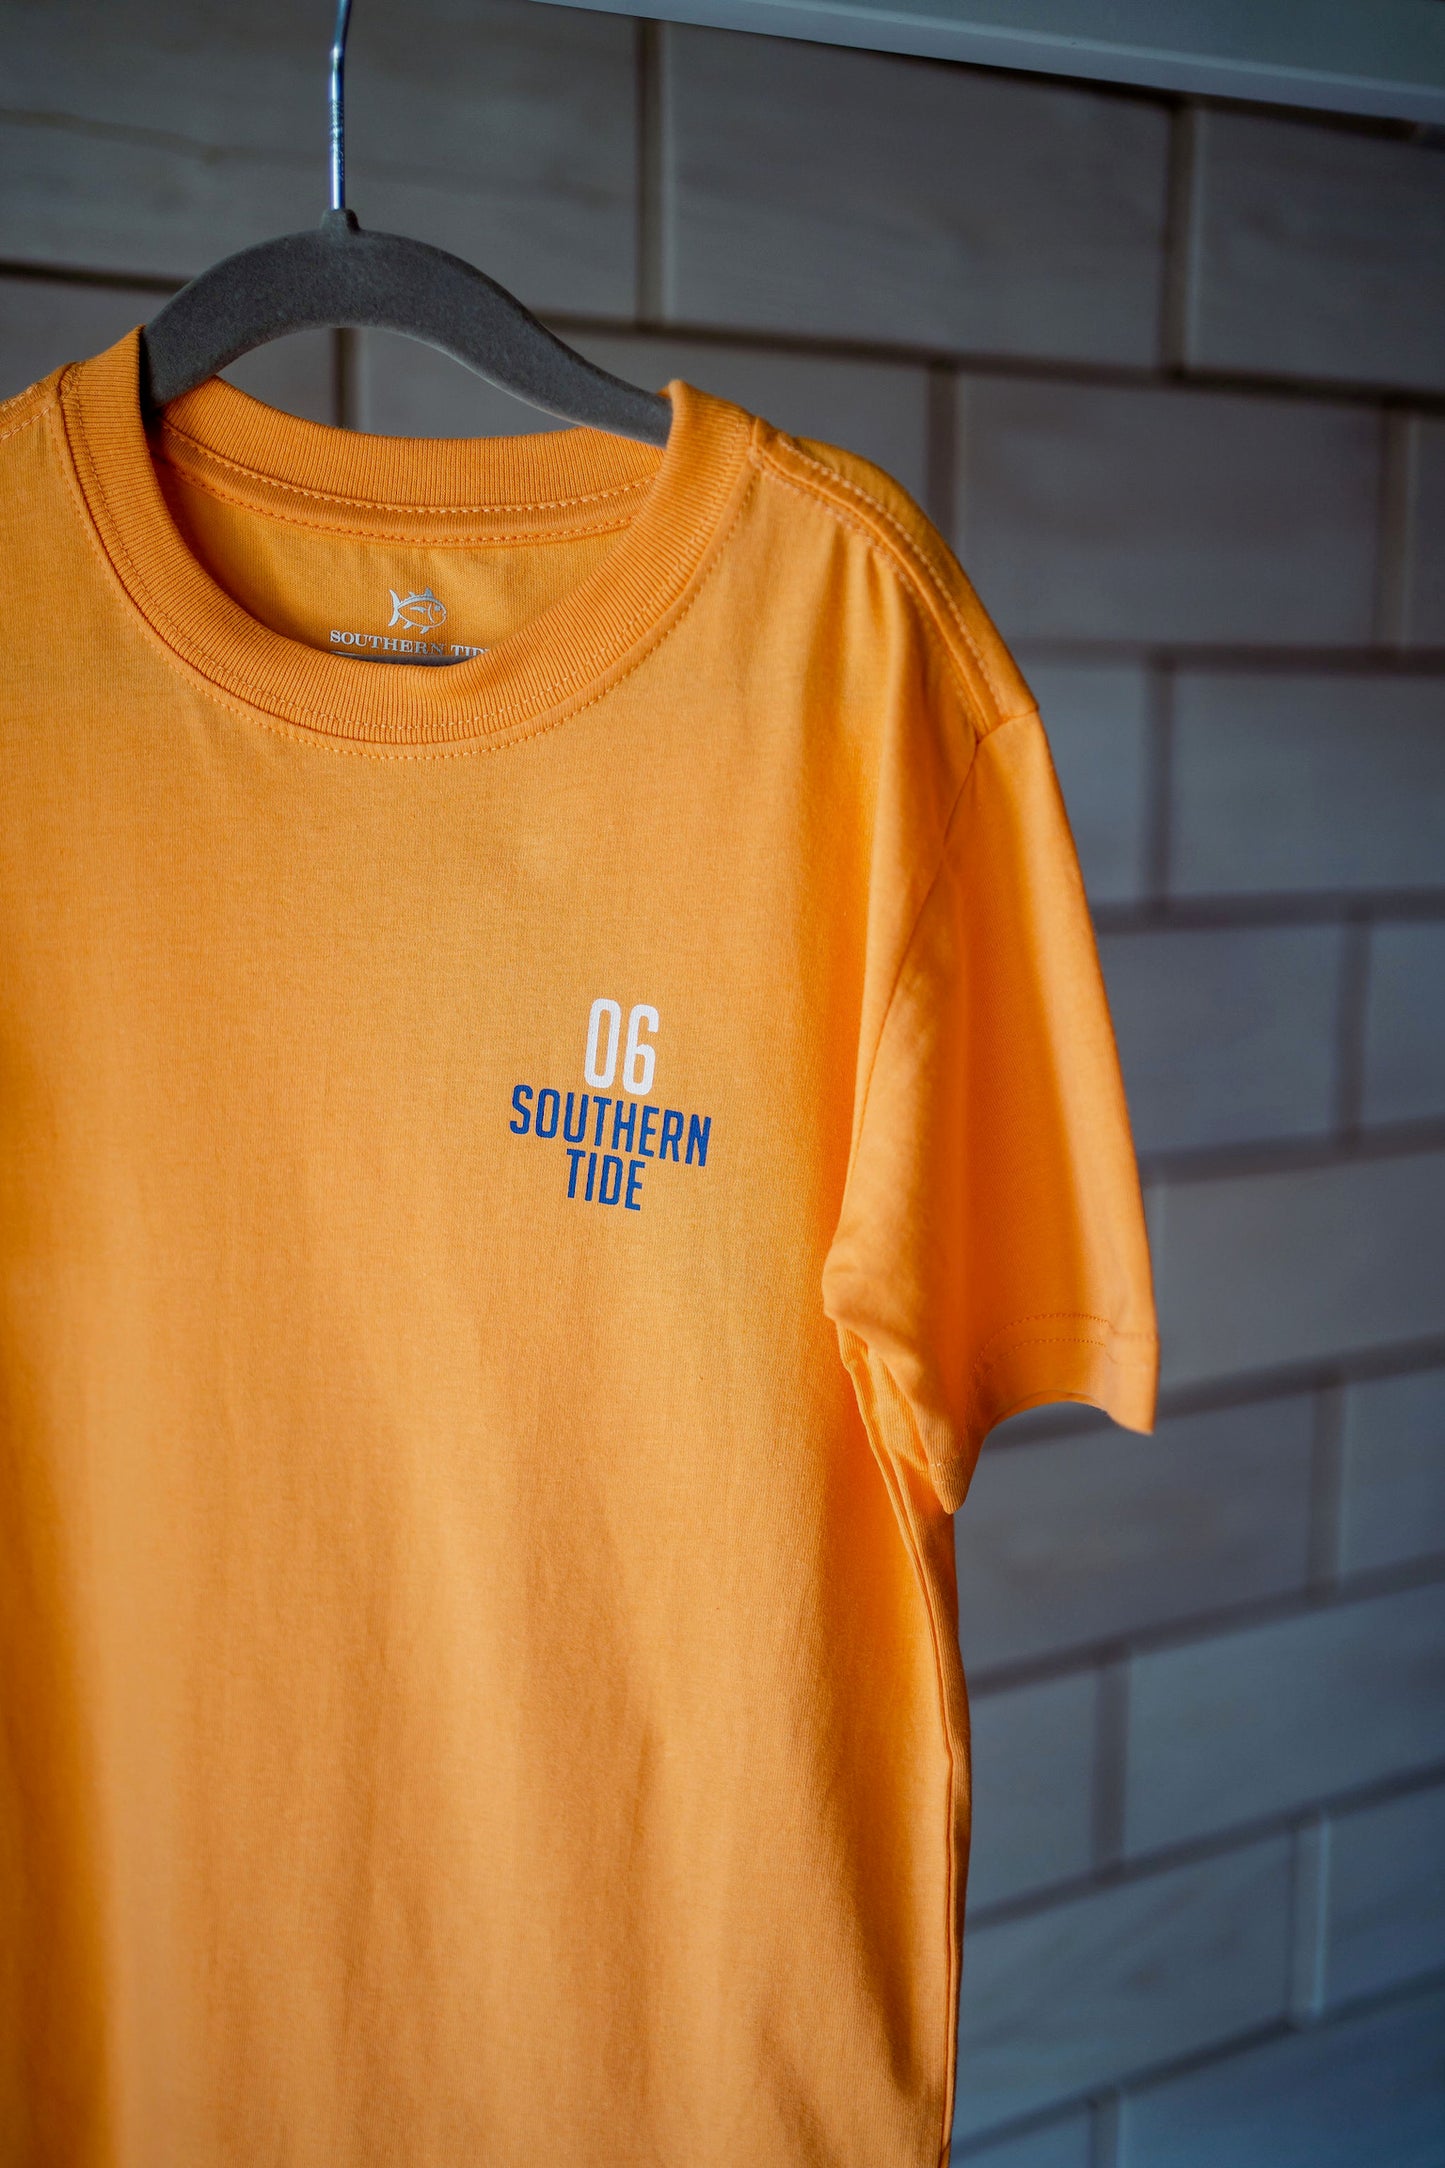 Boys Southern Tide Skipjack Surf Club T-Shirt